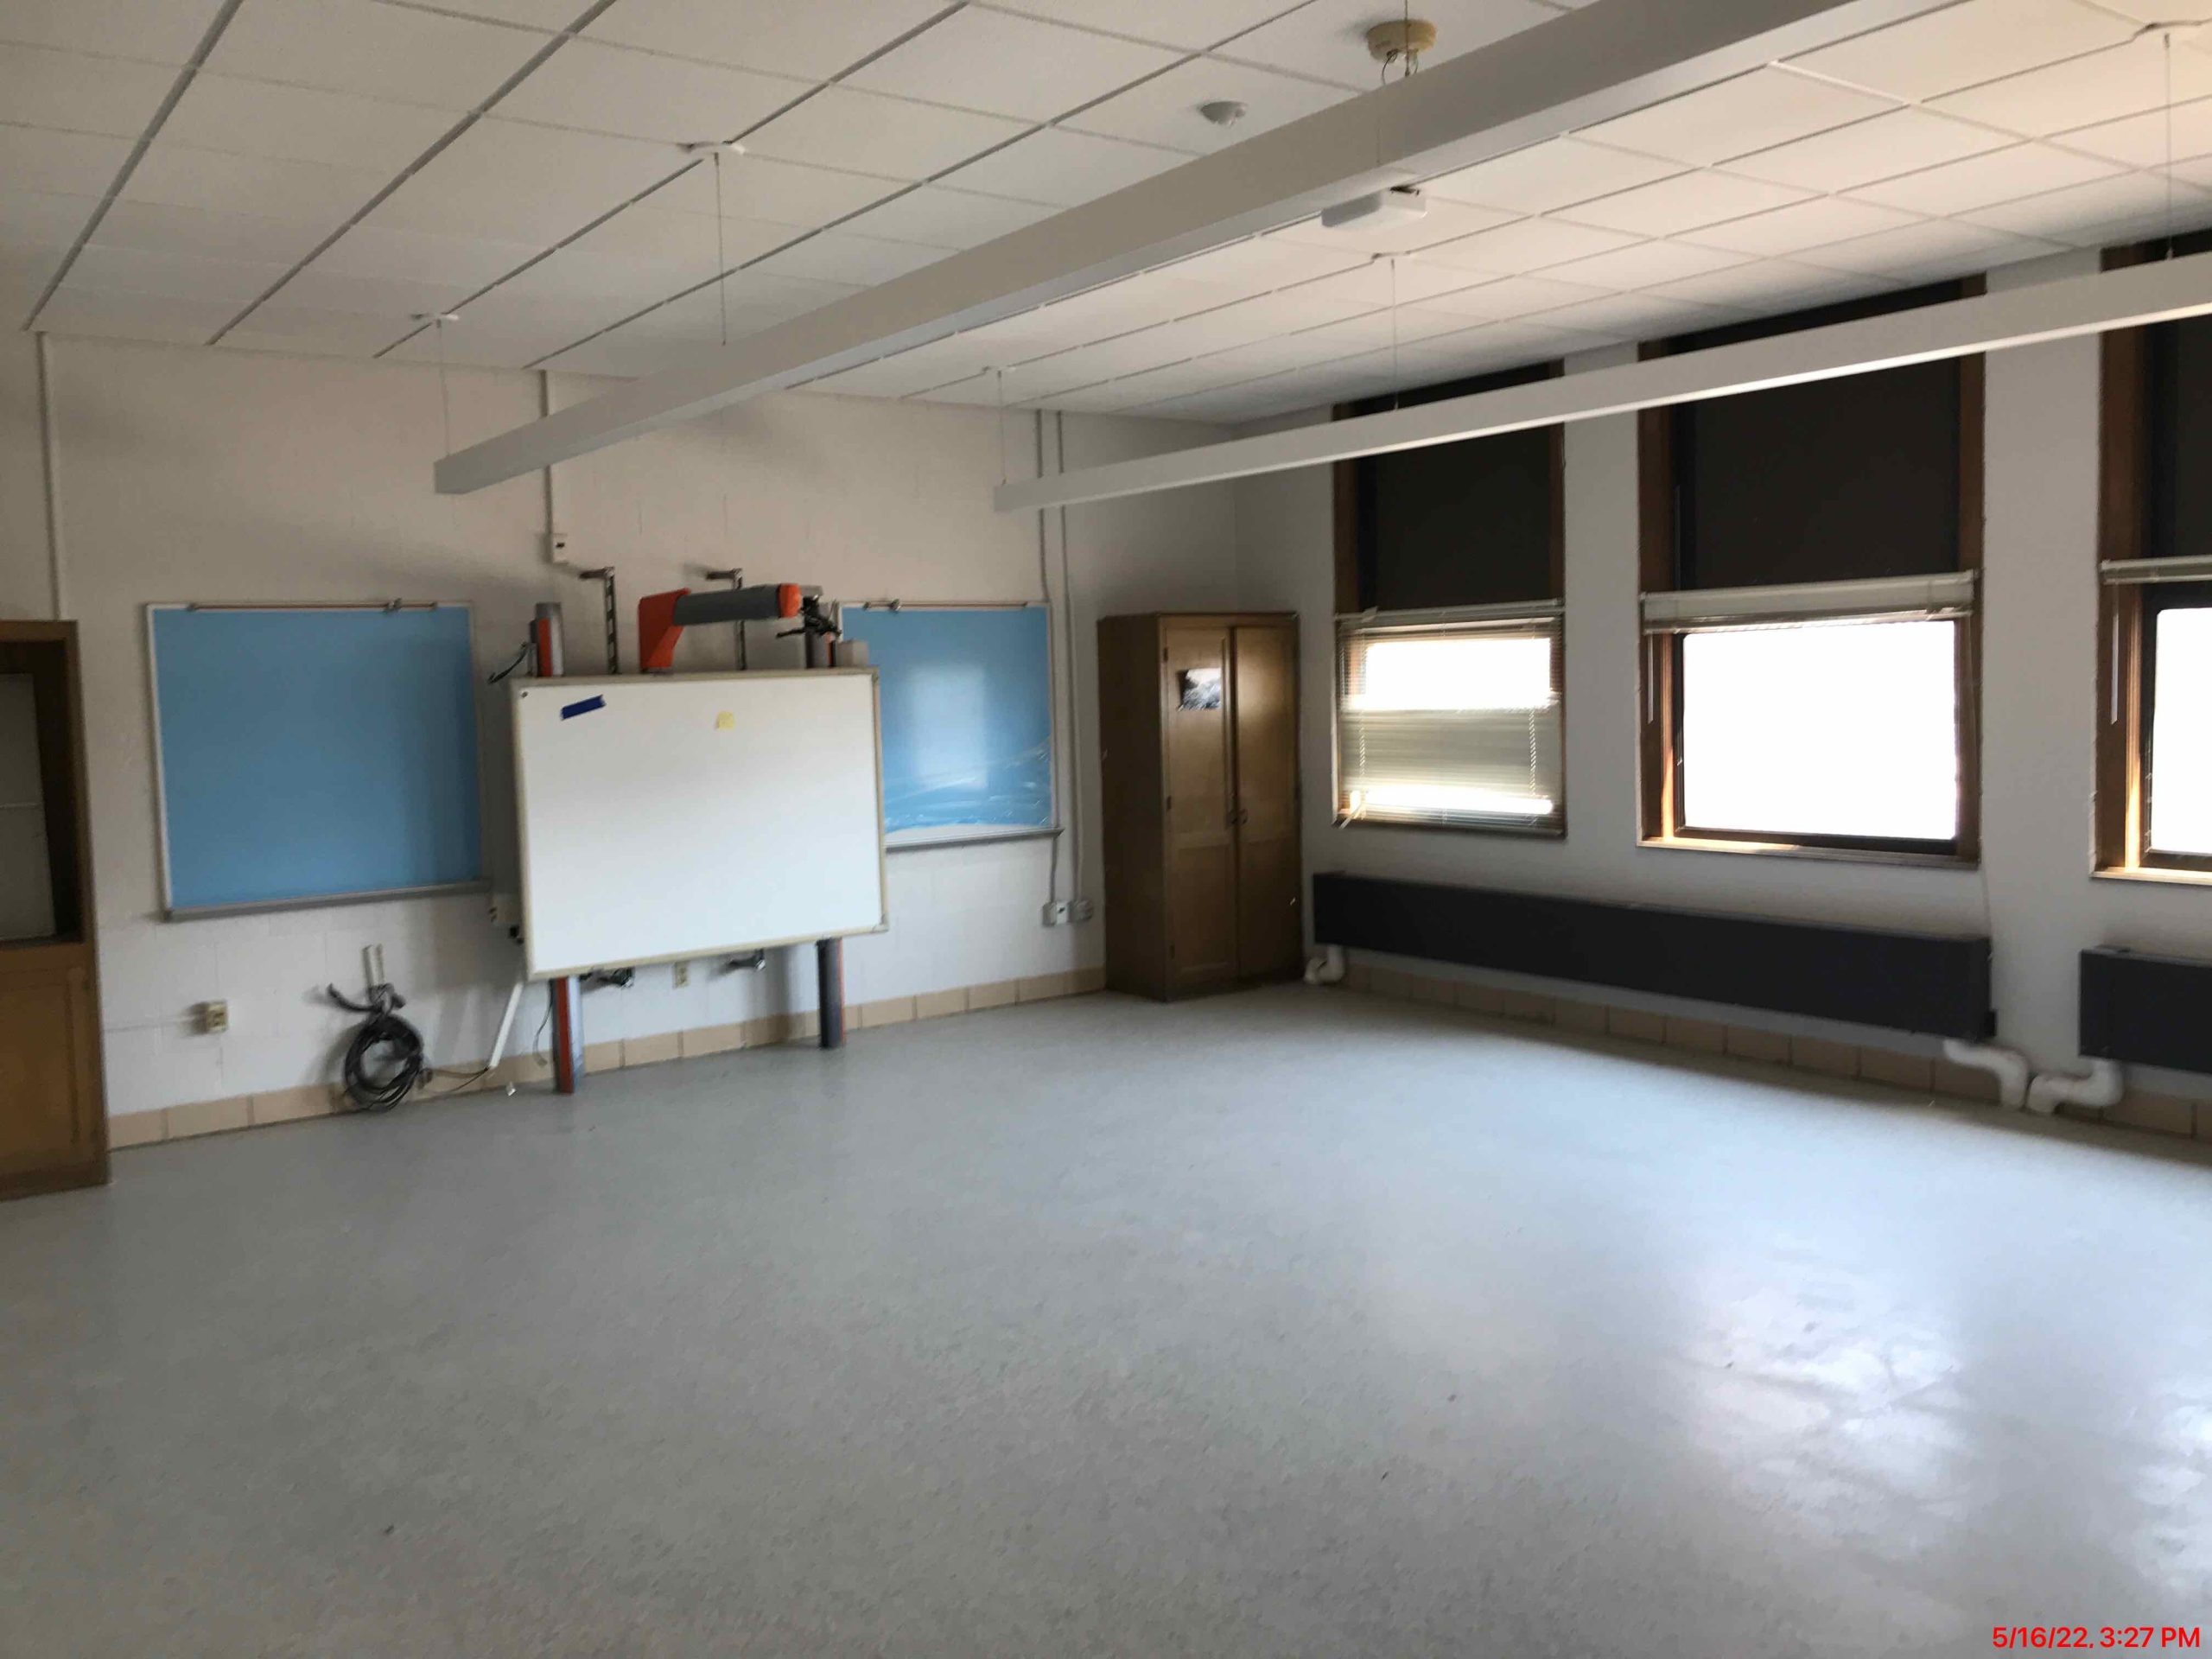 Corridor & Classroom Progress image 1